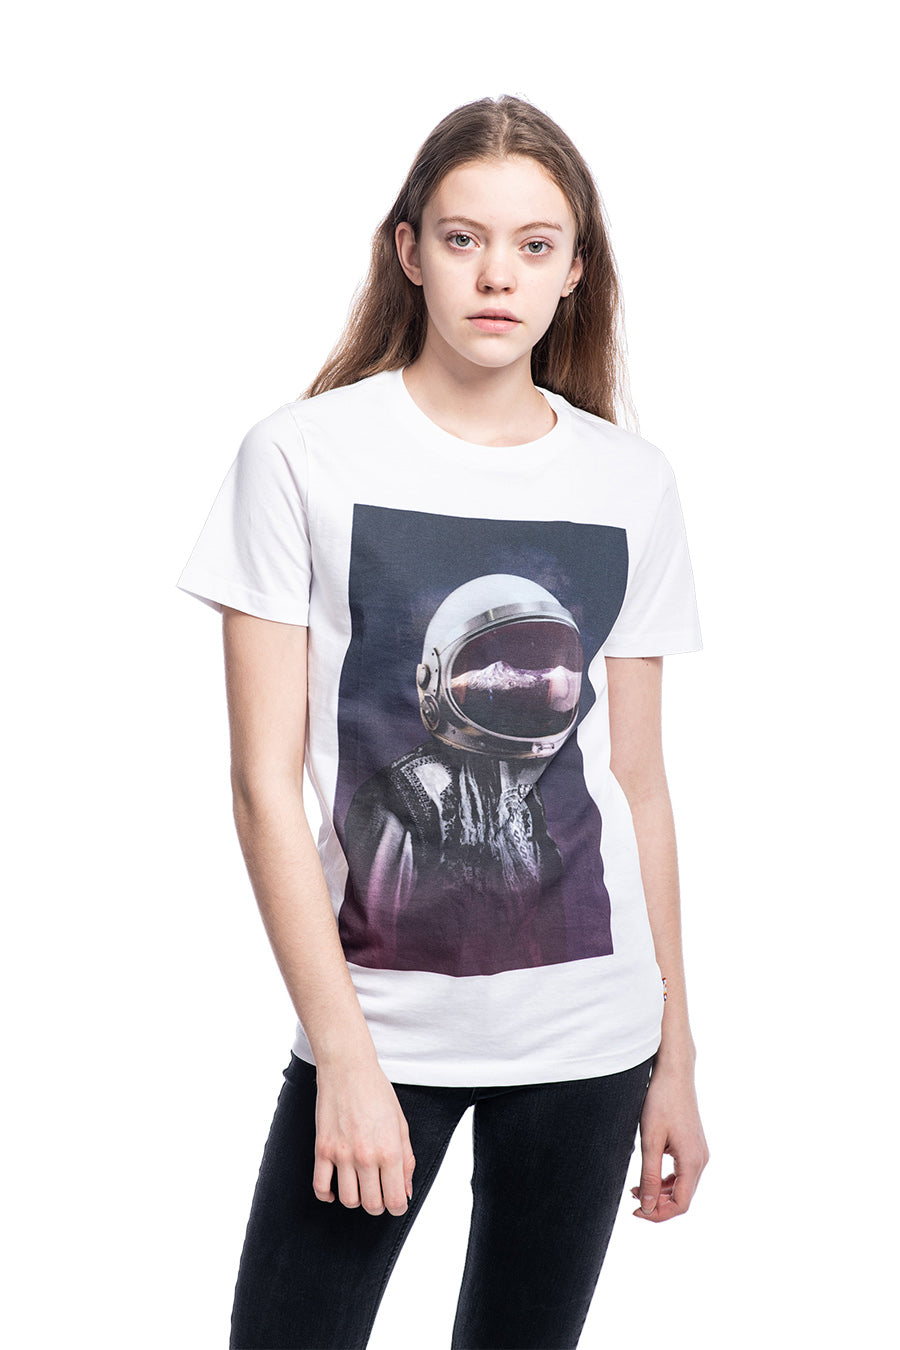 Shabeeg-Cosmic-t-shirt